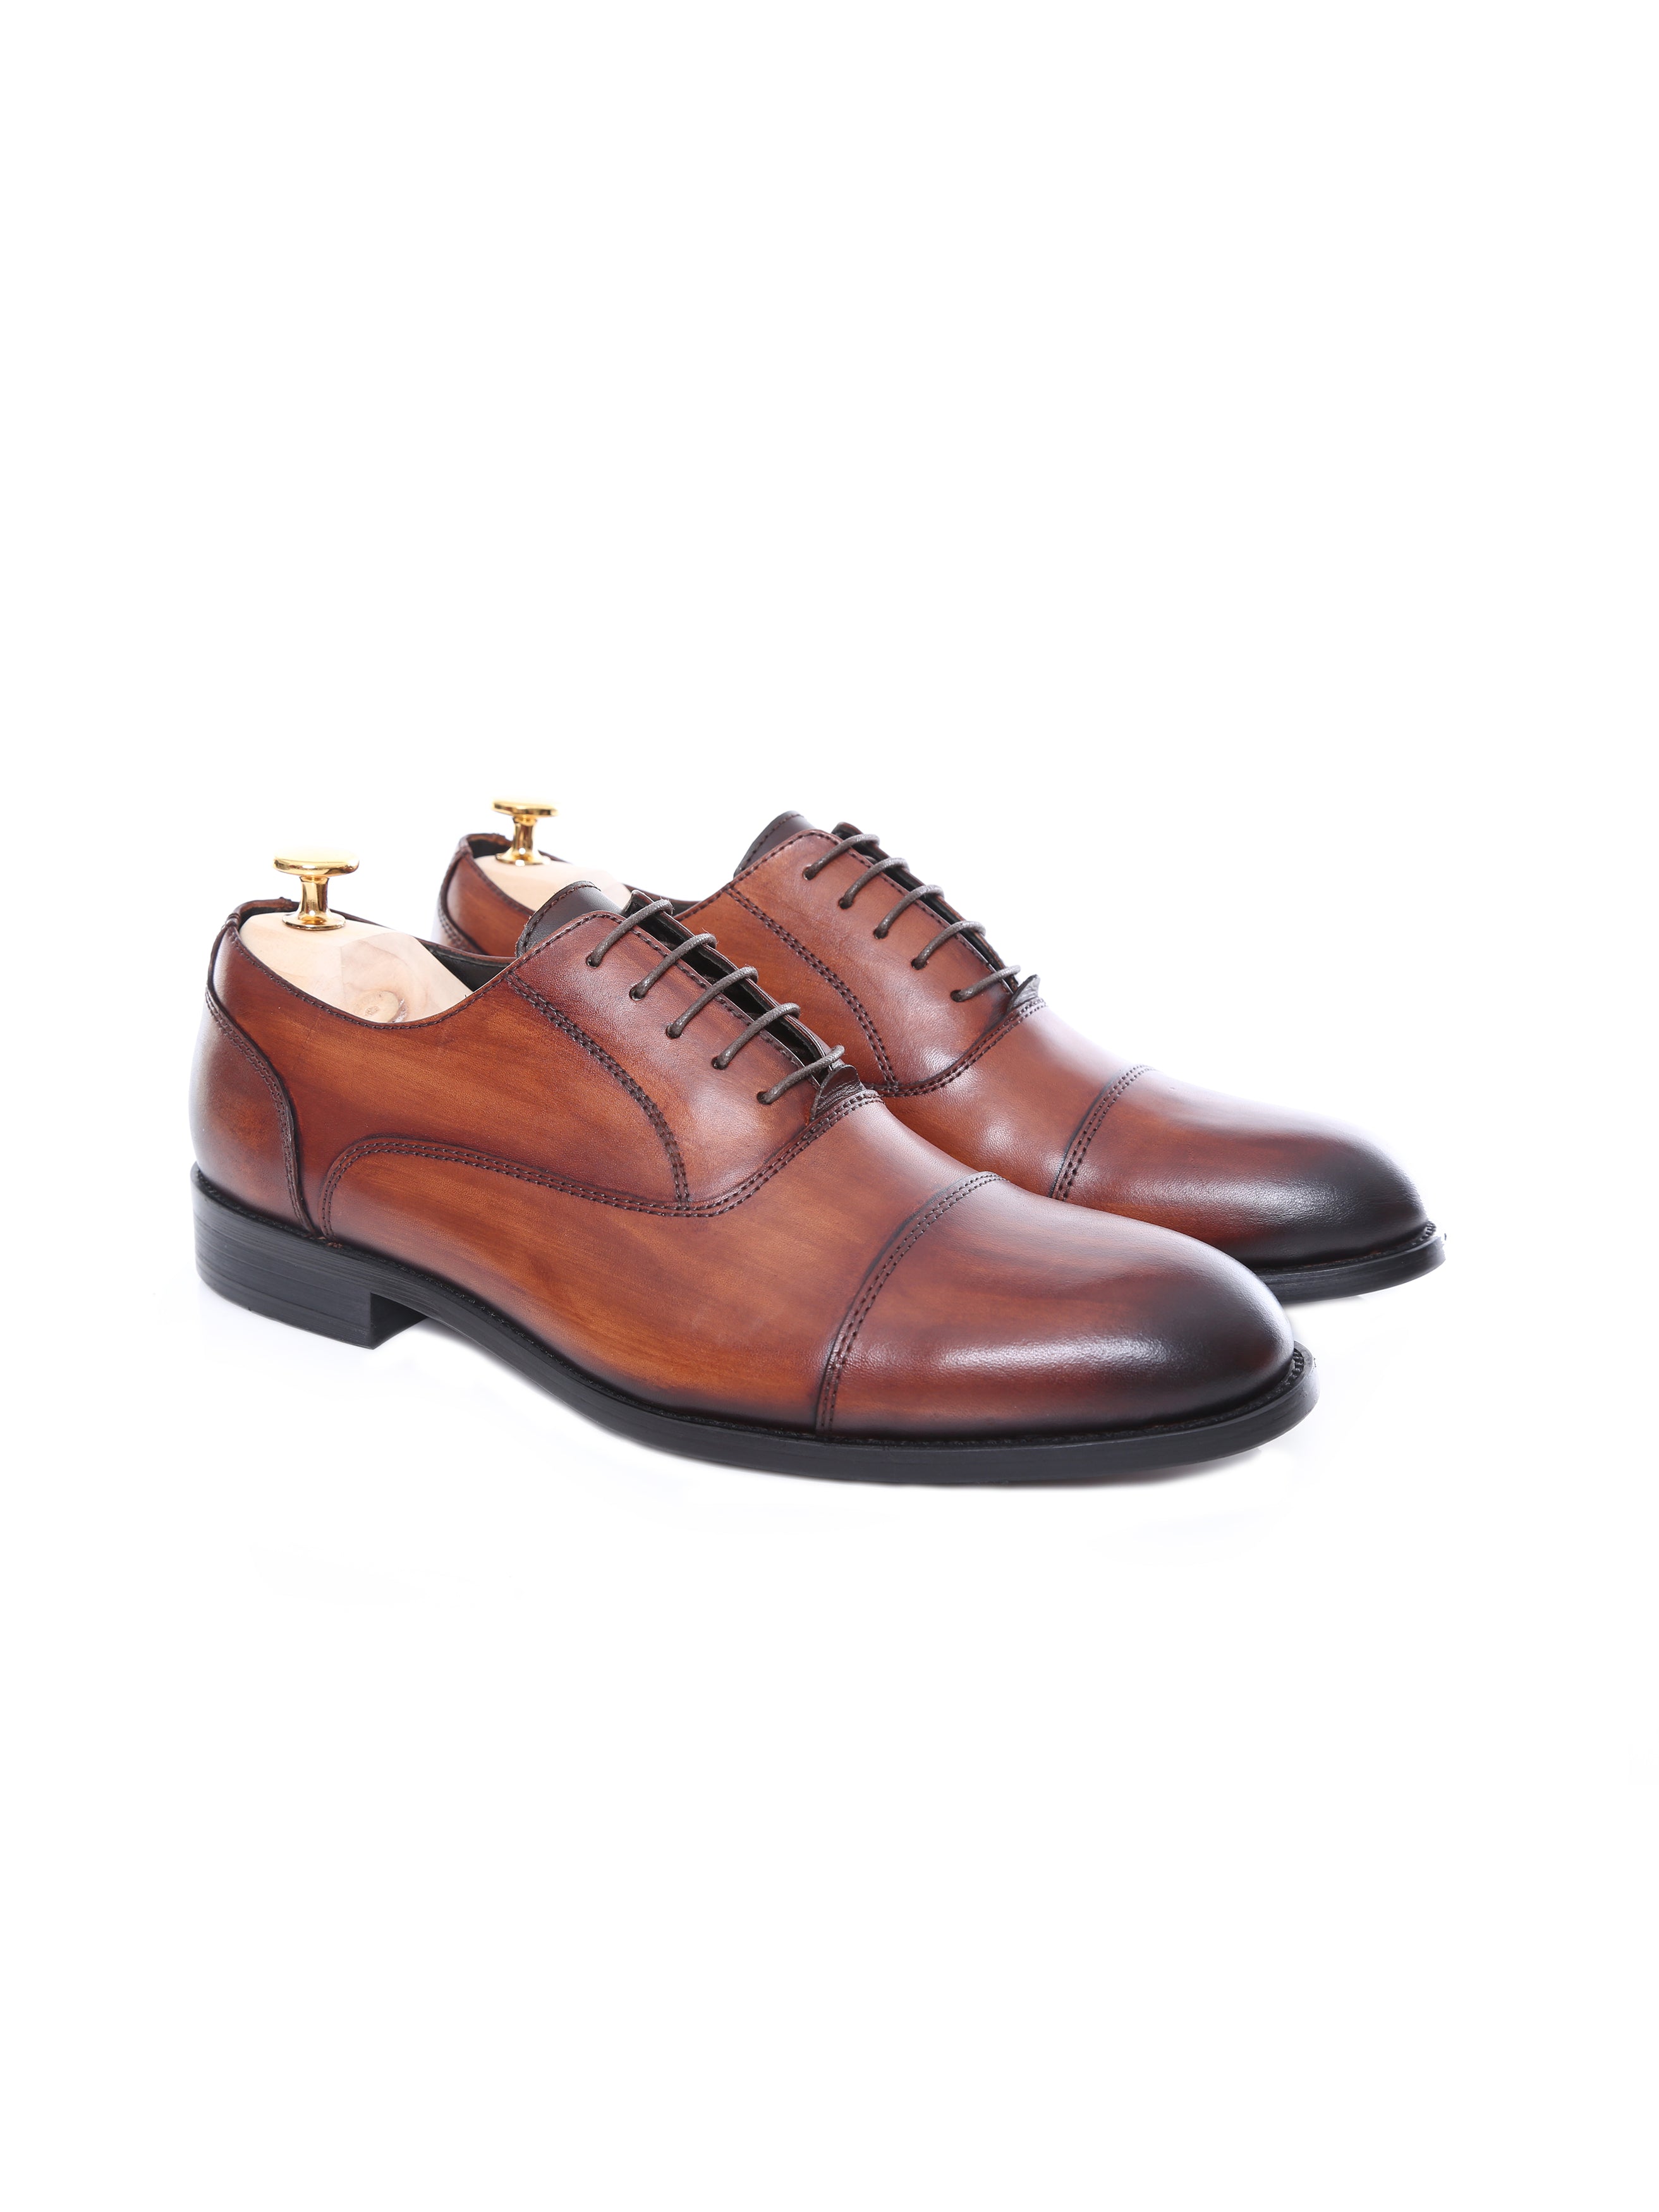 Oxford Cap Toe - Cognac Tan Lace Up (Hand Painted Patina) - Zeve Shoes